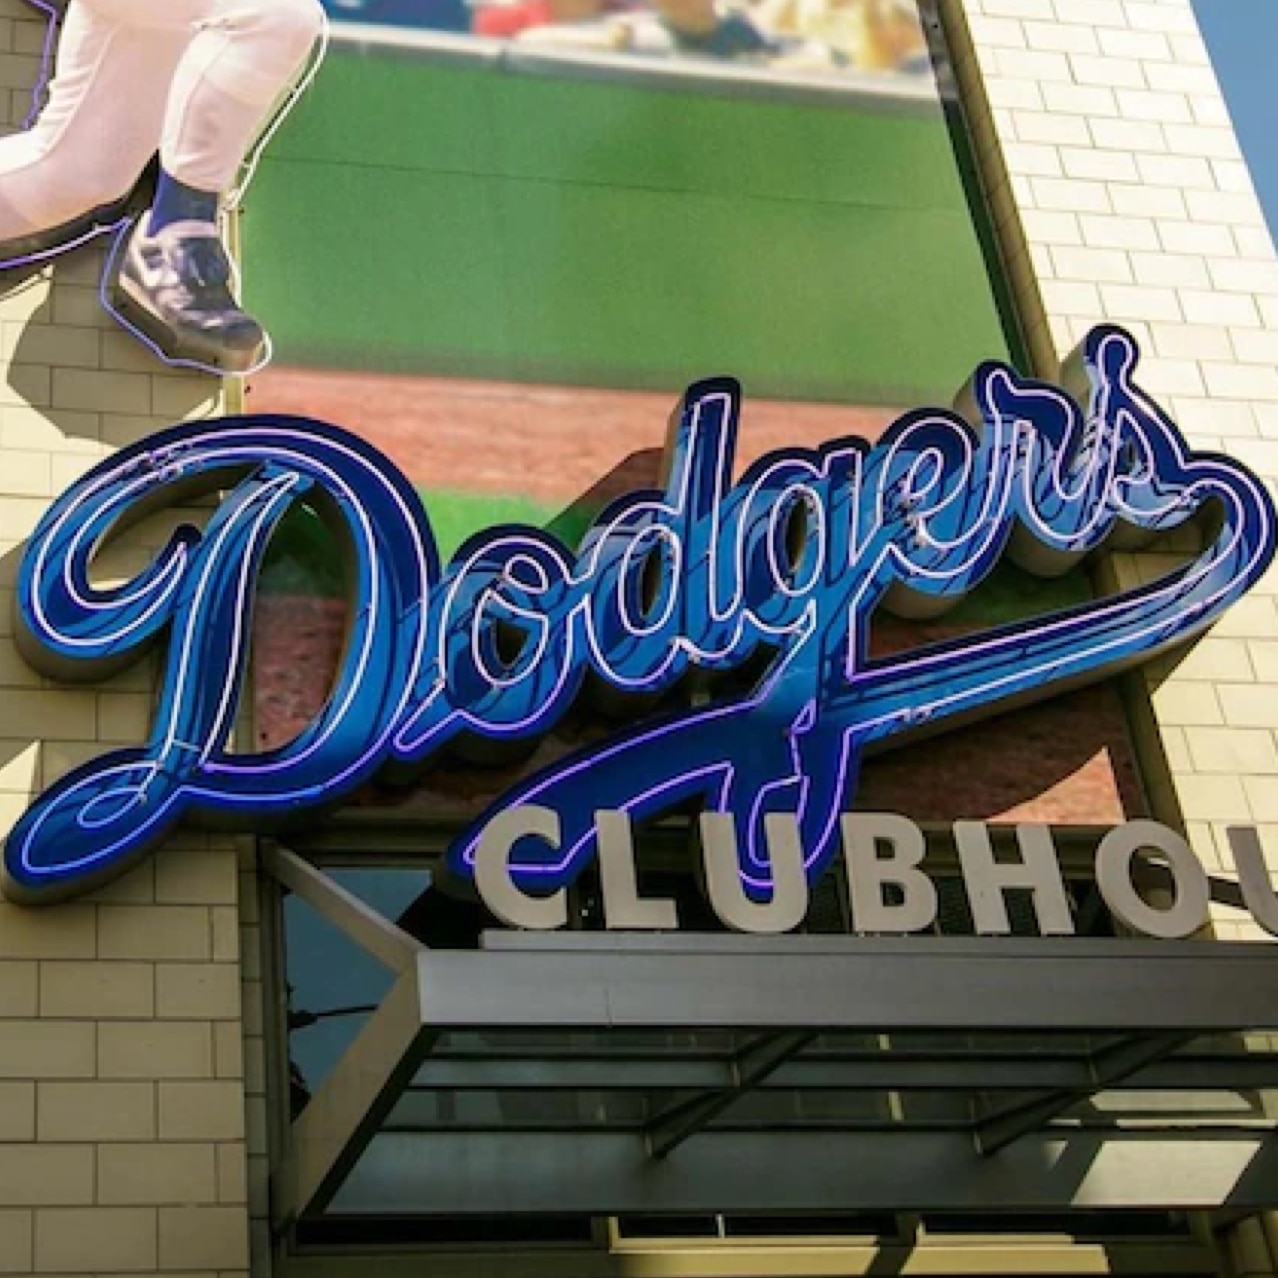 Los Angeles Dodgers Jerseys in Los Angeles Dodgers Team Shop